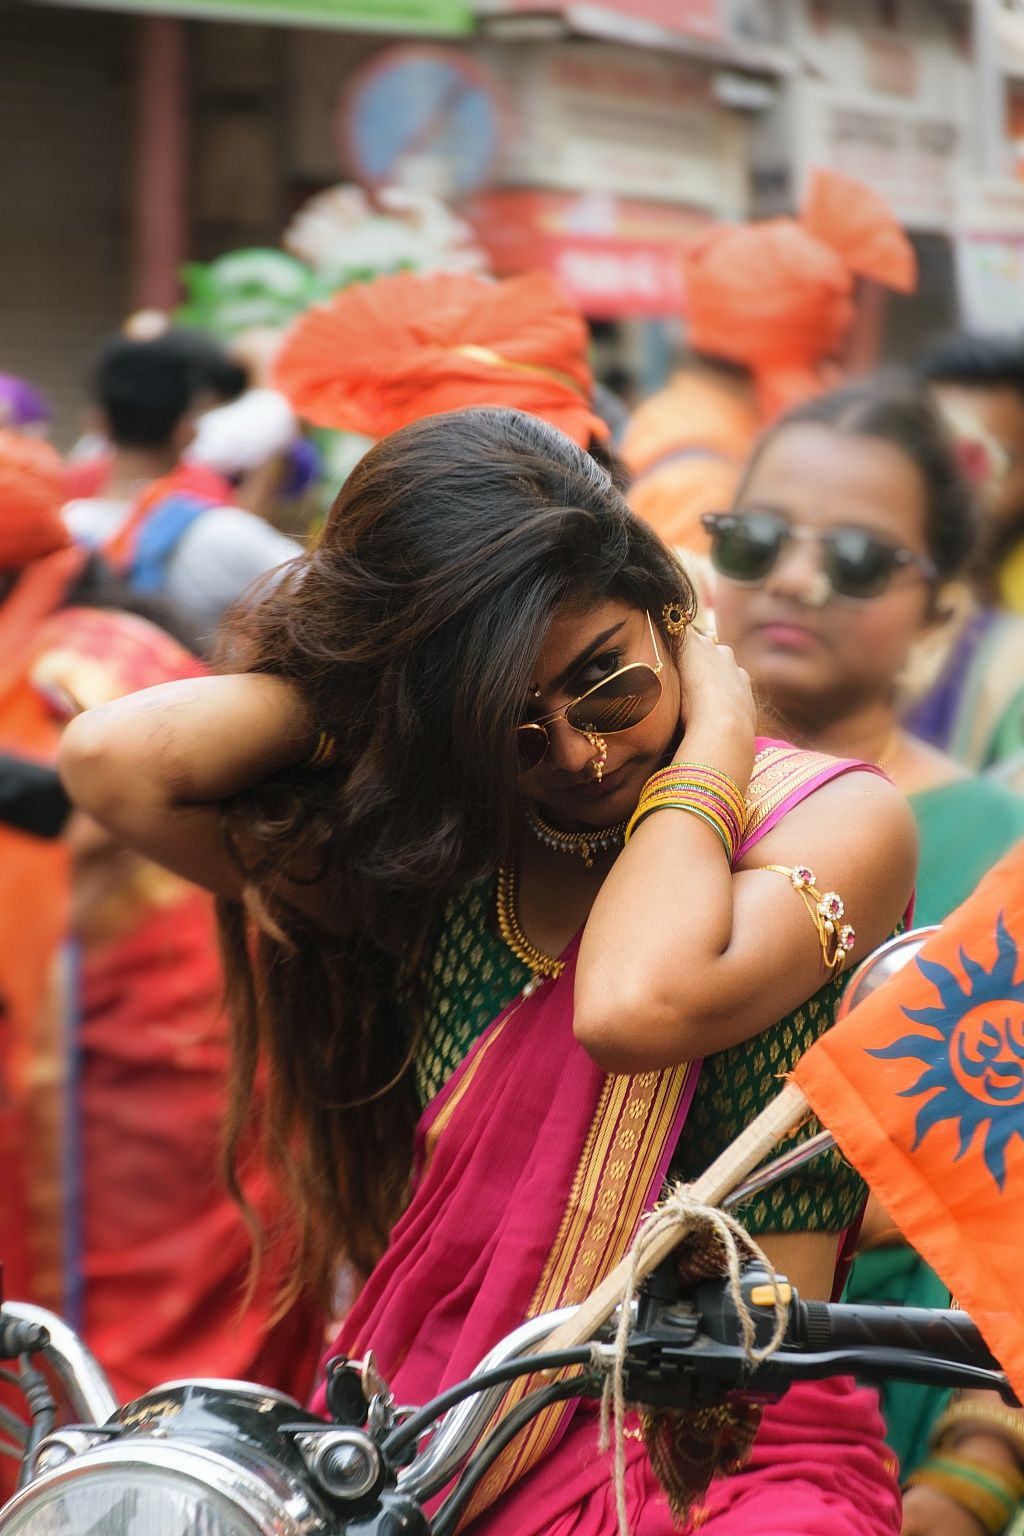 Women bikers during Shobha Yatra indian girlboss celebration